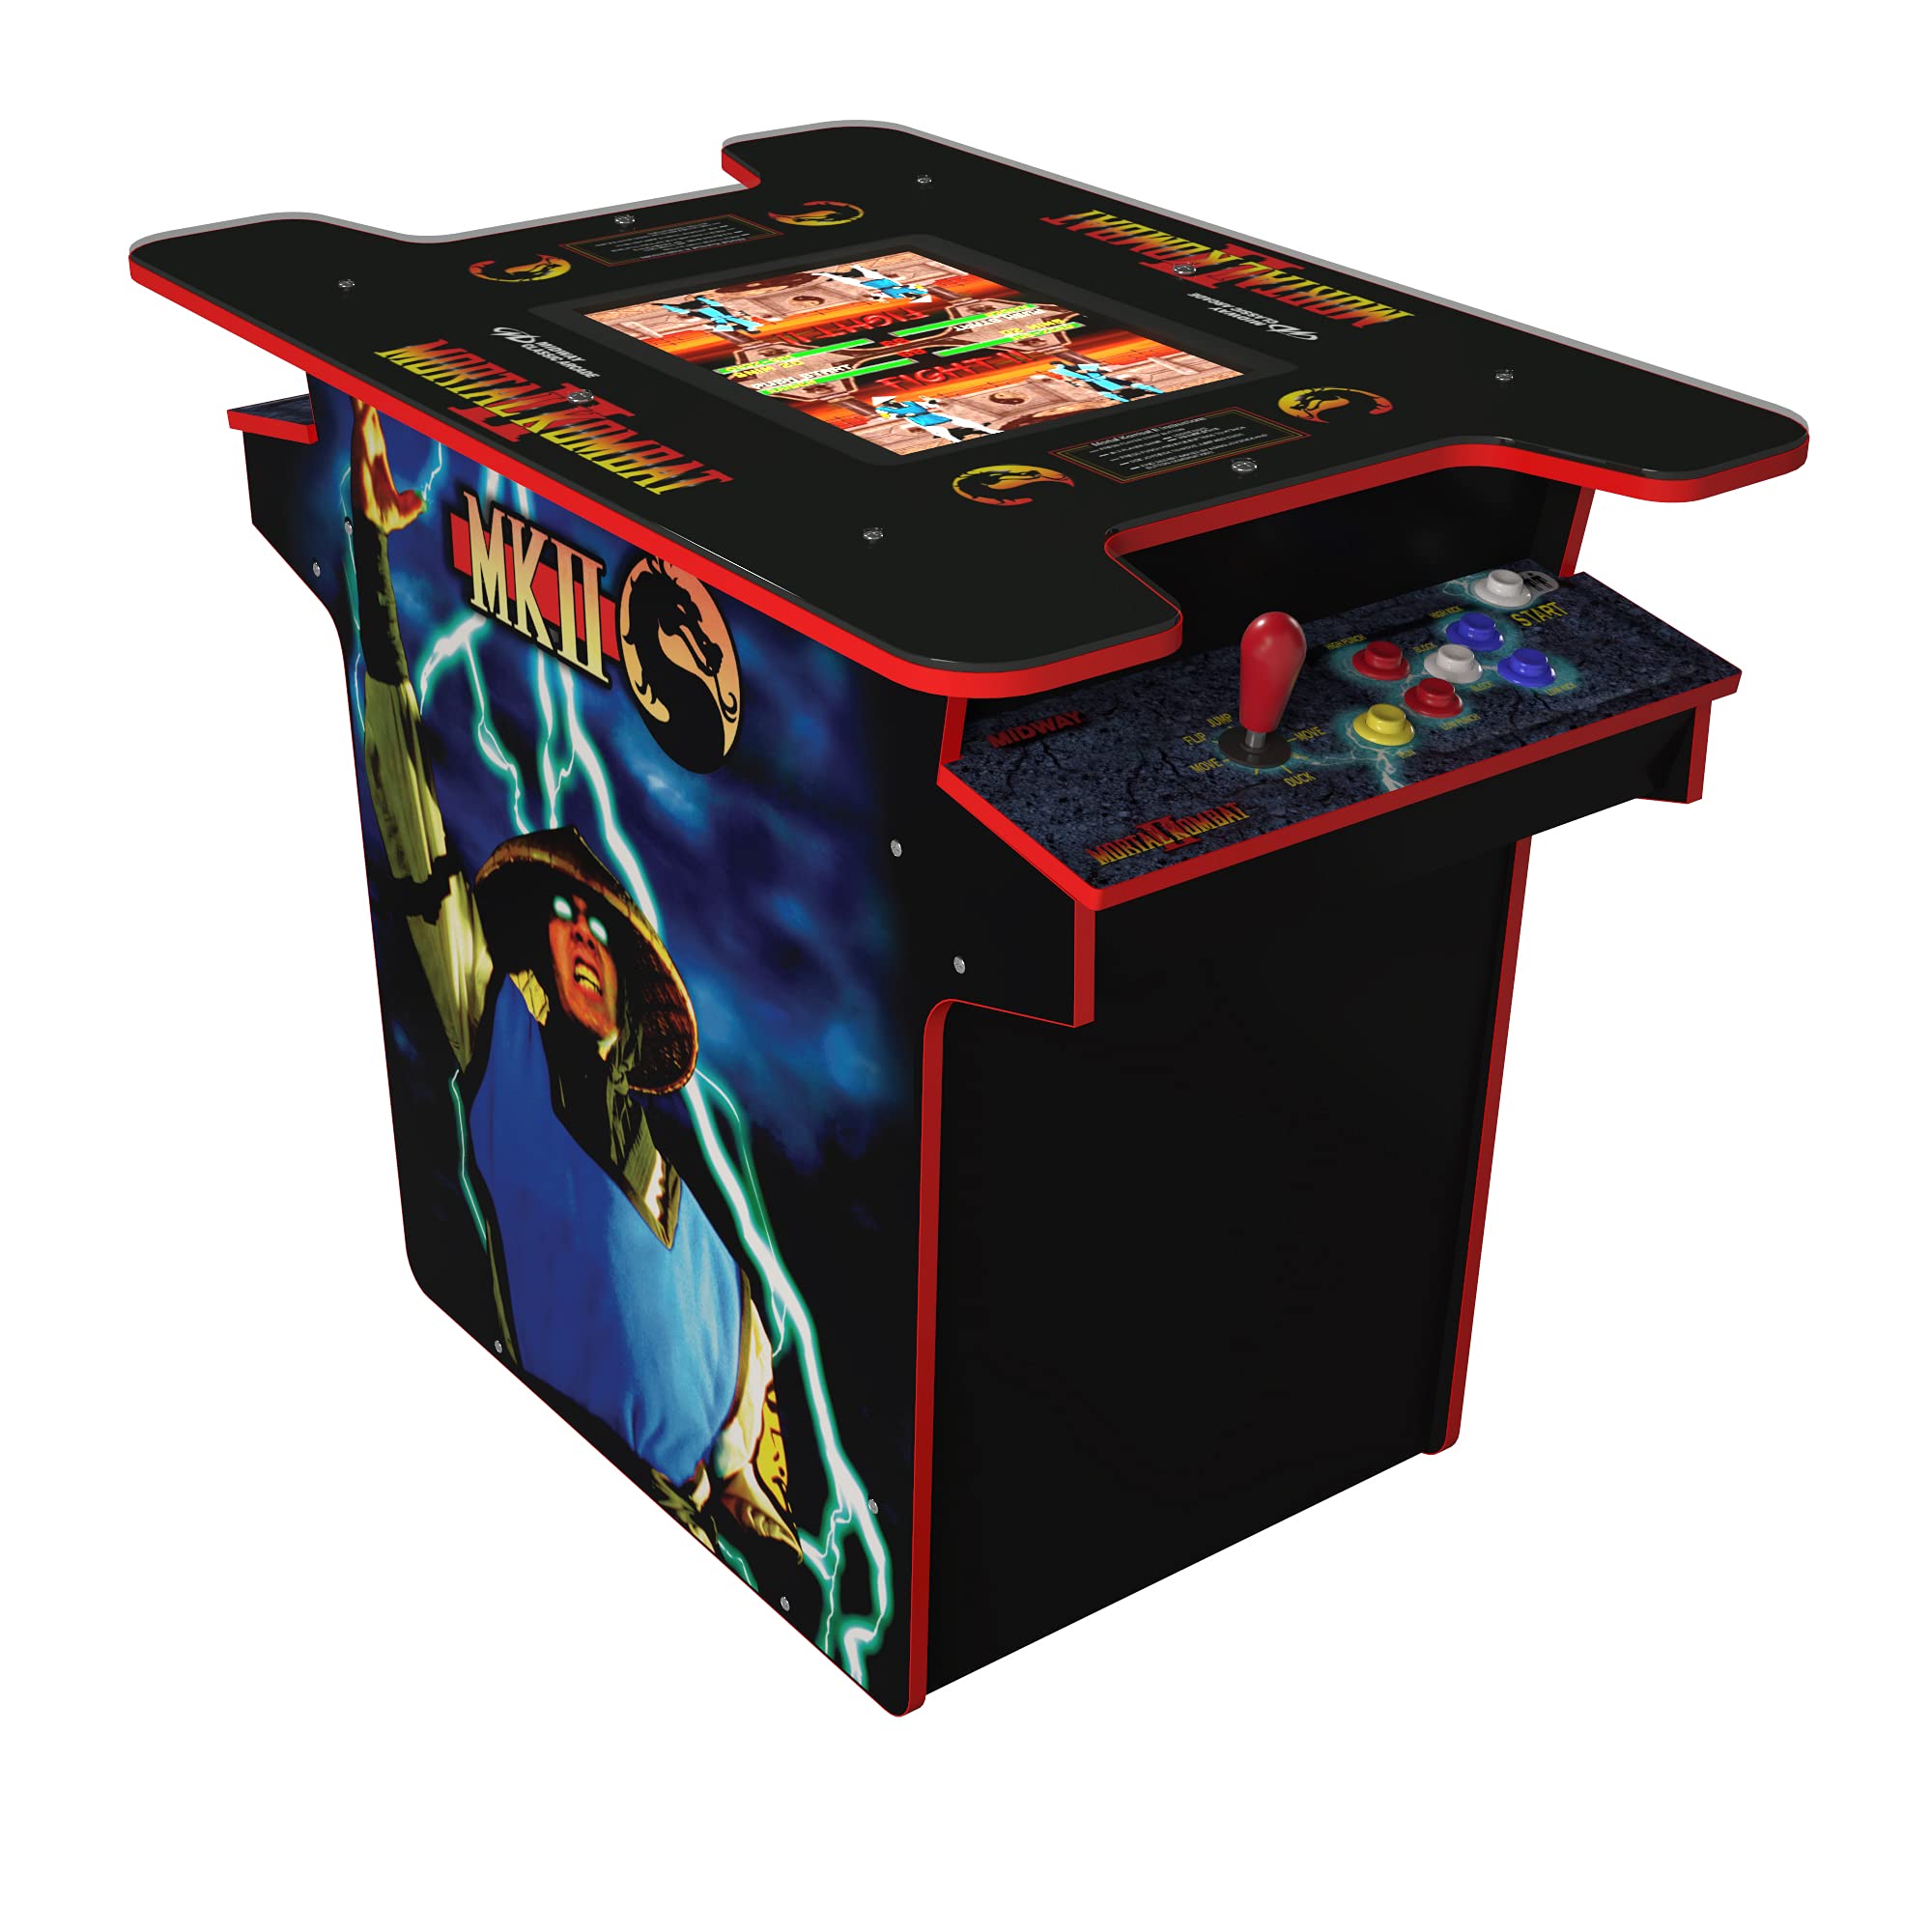 Arcade1Up Mortal Kombat Head-to-Head Arcade Machine (9 games) $300 + Free Shipping